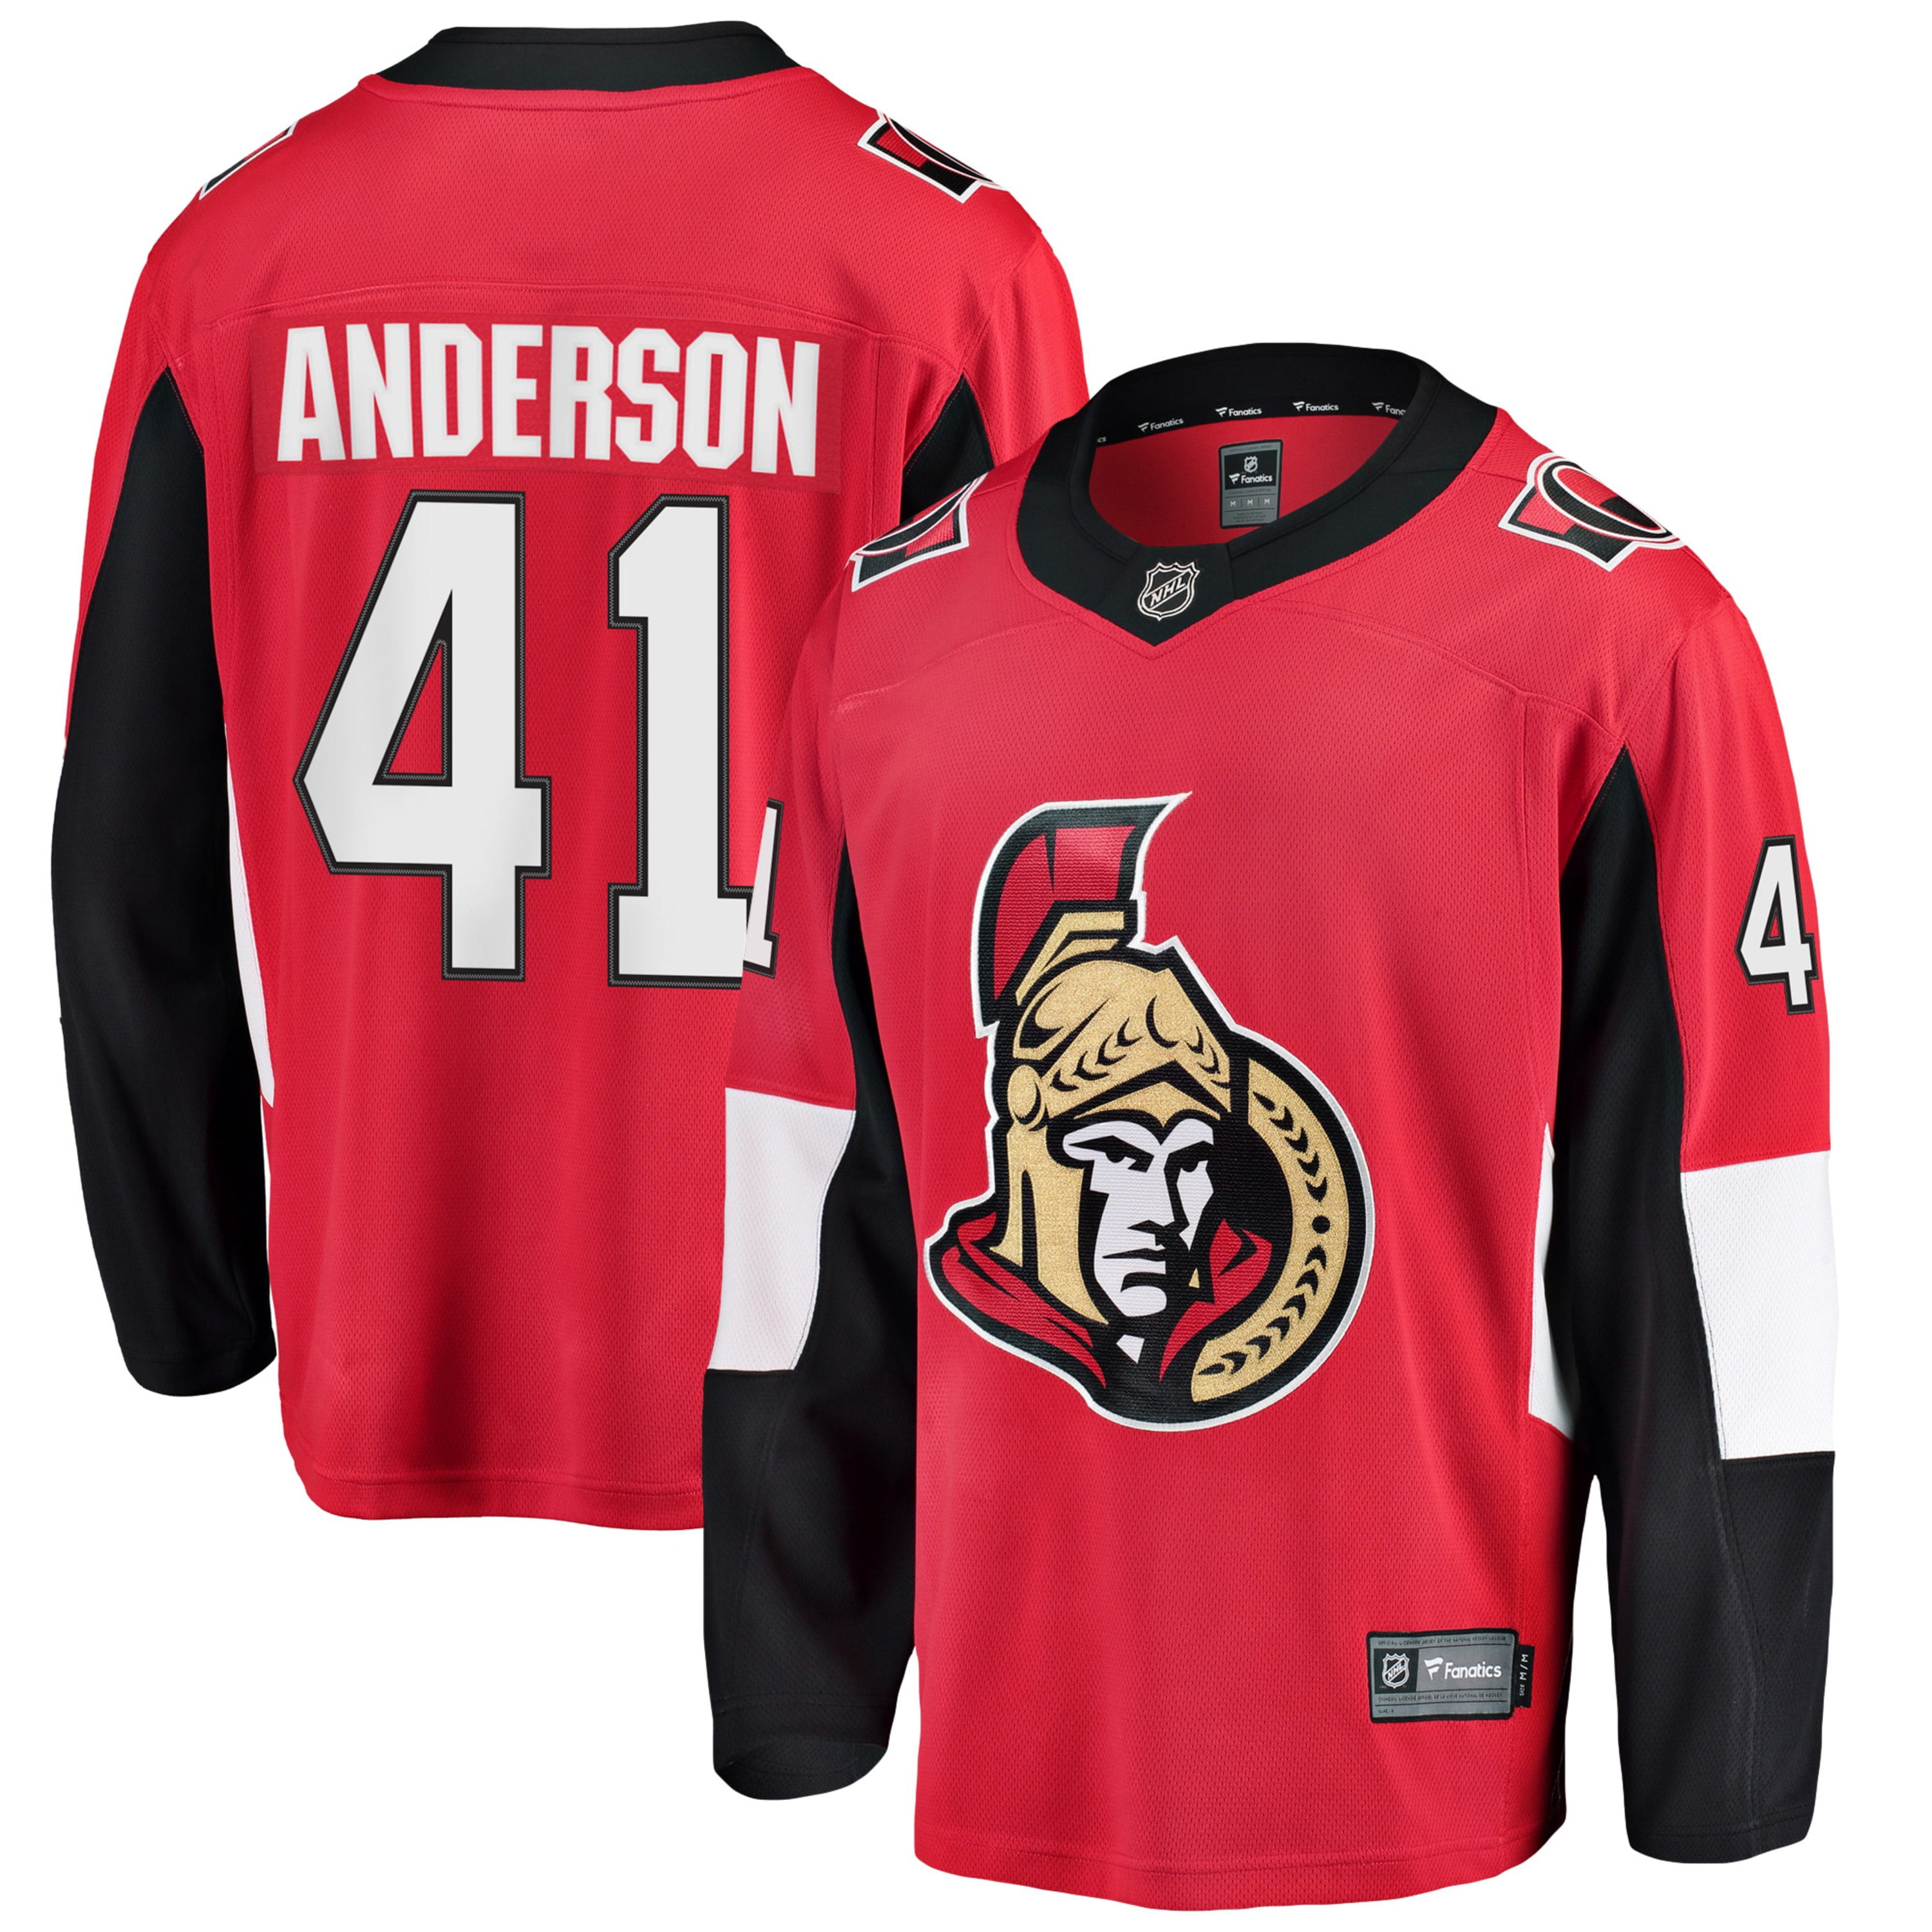 Craig Anderson Senators jersey